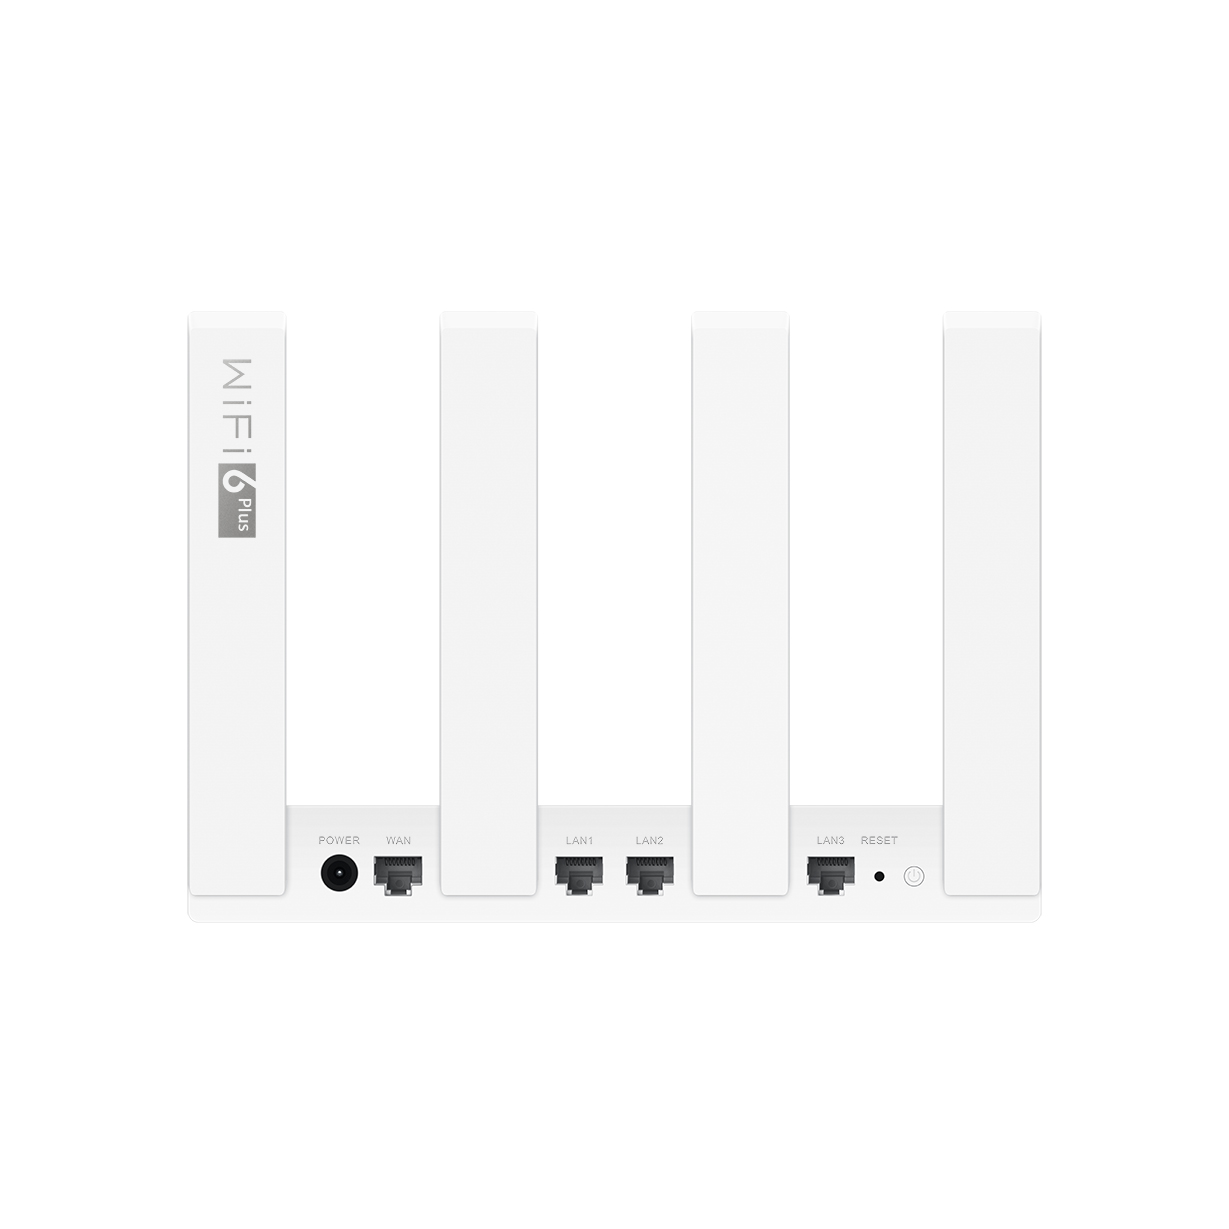 HUAWEI Router AX3, Wifi 6, White